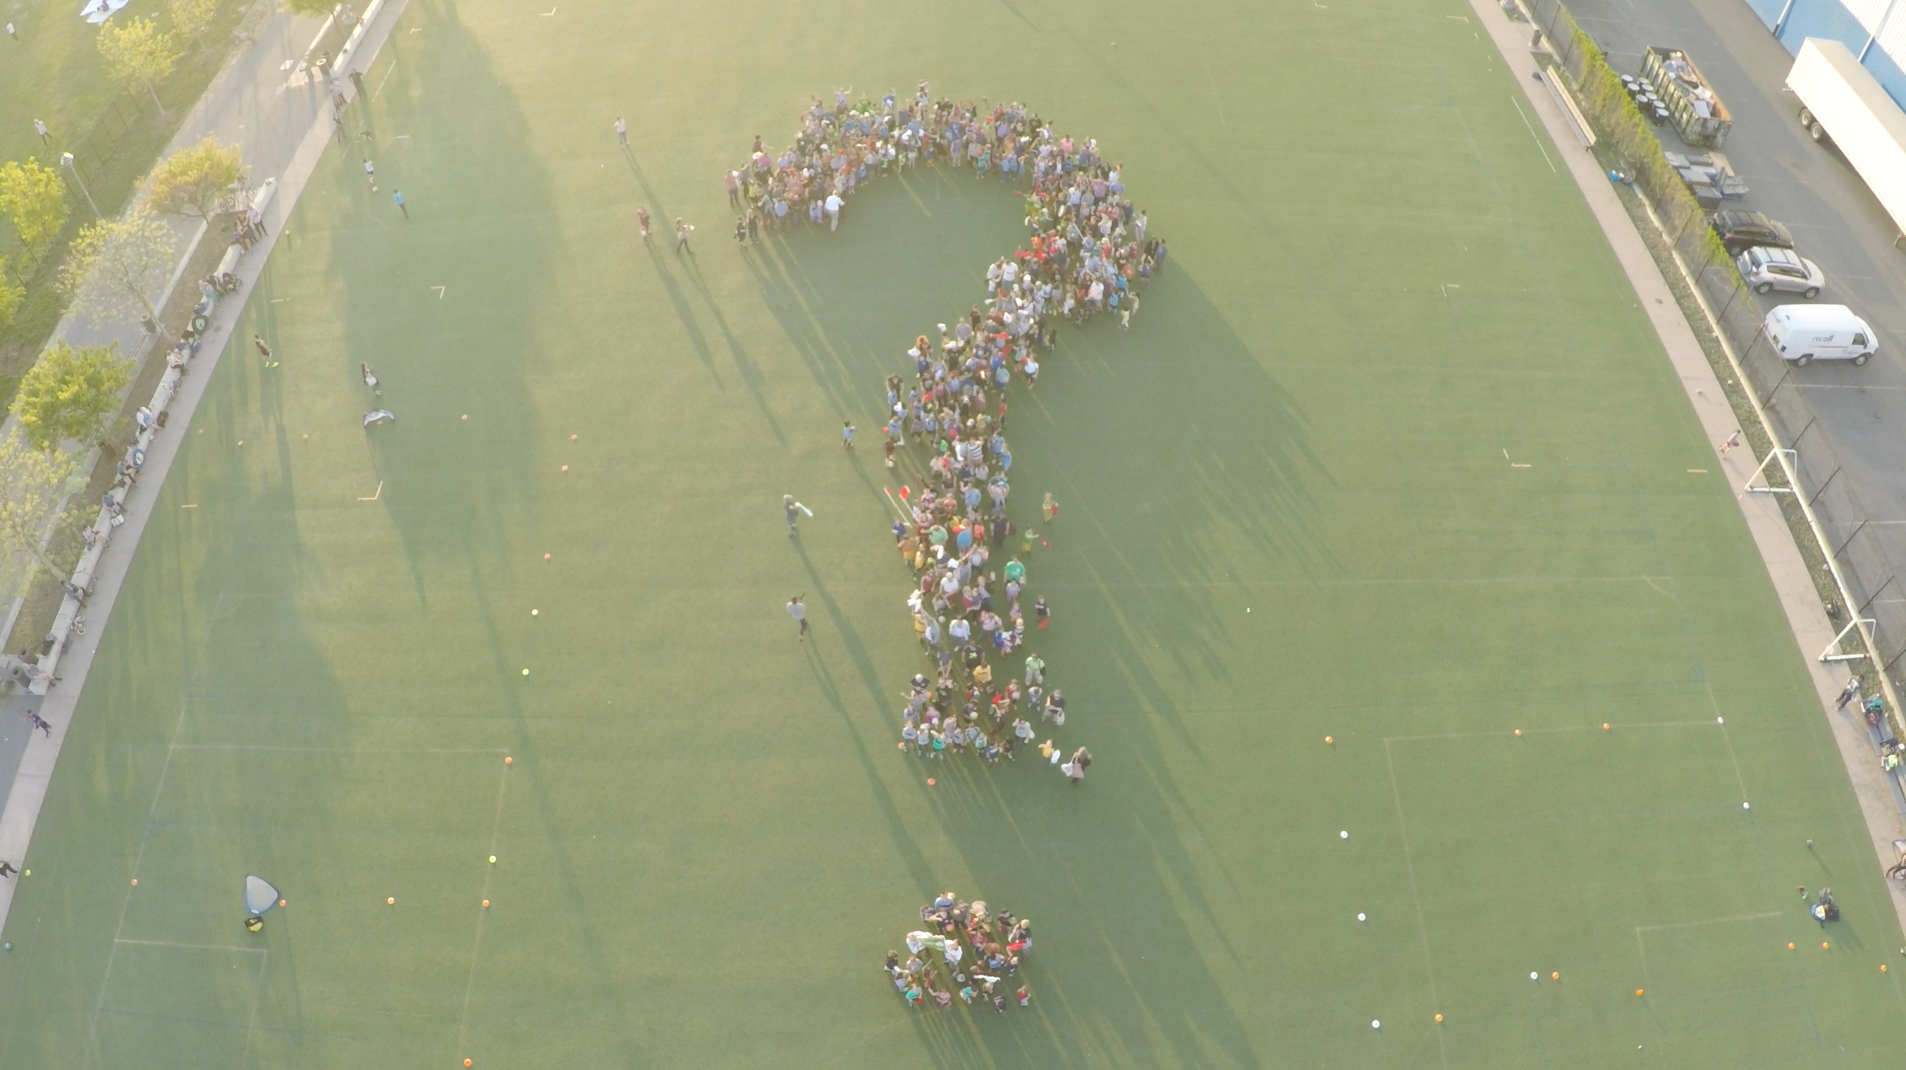 flash mob question mark on soccer field aerial shot